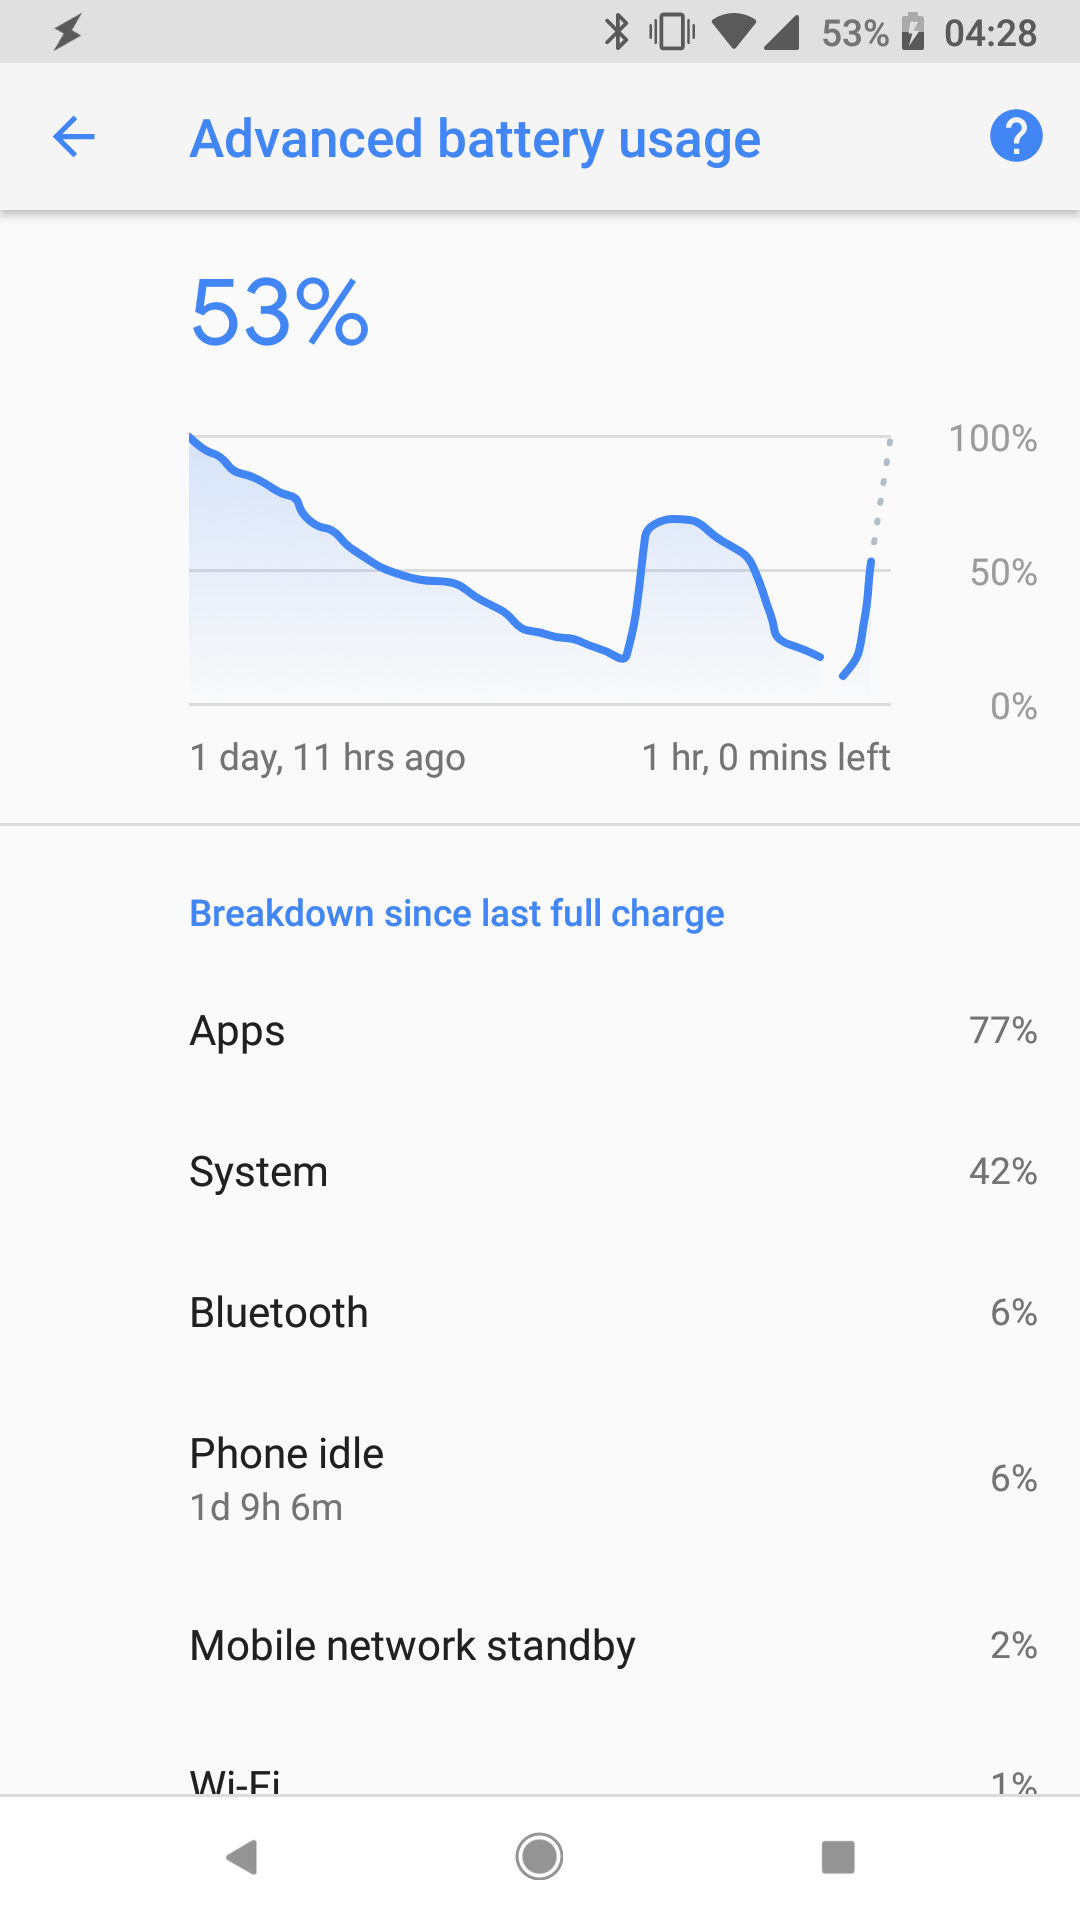 Google Pixel's battery